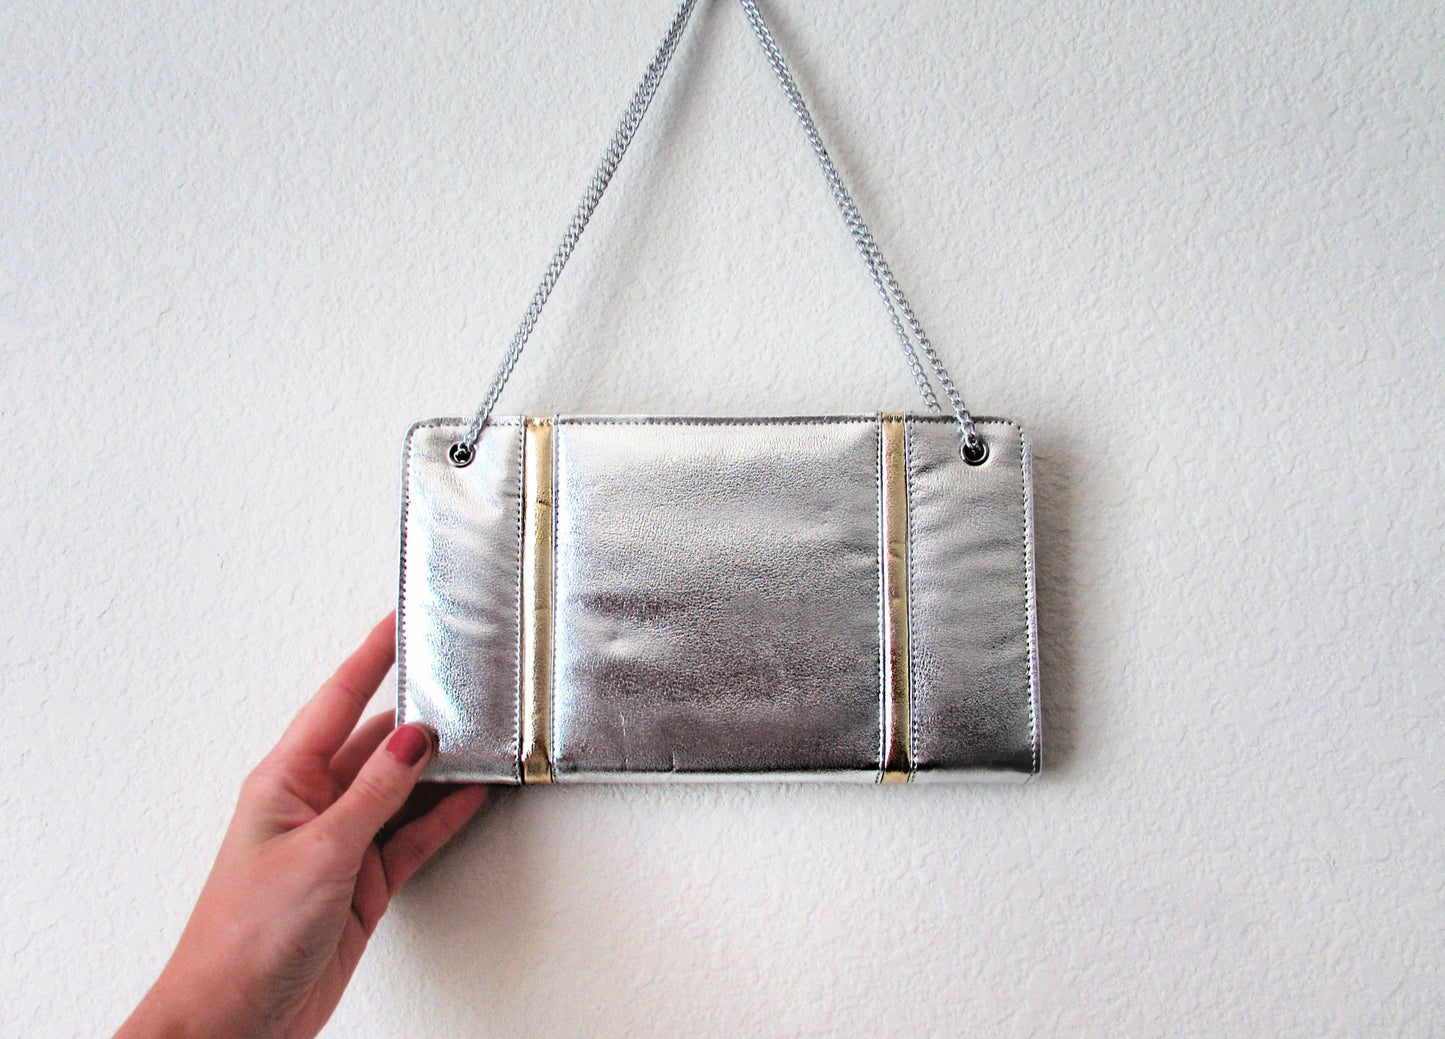 Vintage Silver Clutch, Metallic Silver Walborg Clutch, 1960s Glam Evening Bag, Retro Silver and Gold Metallic Handbag with Chain Strap